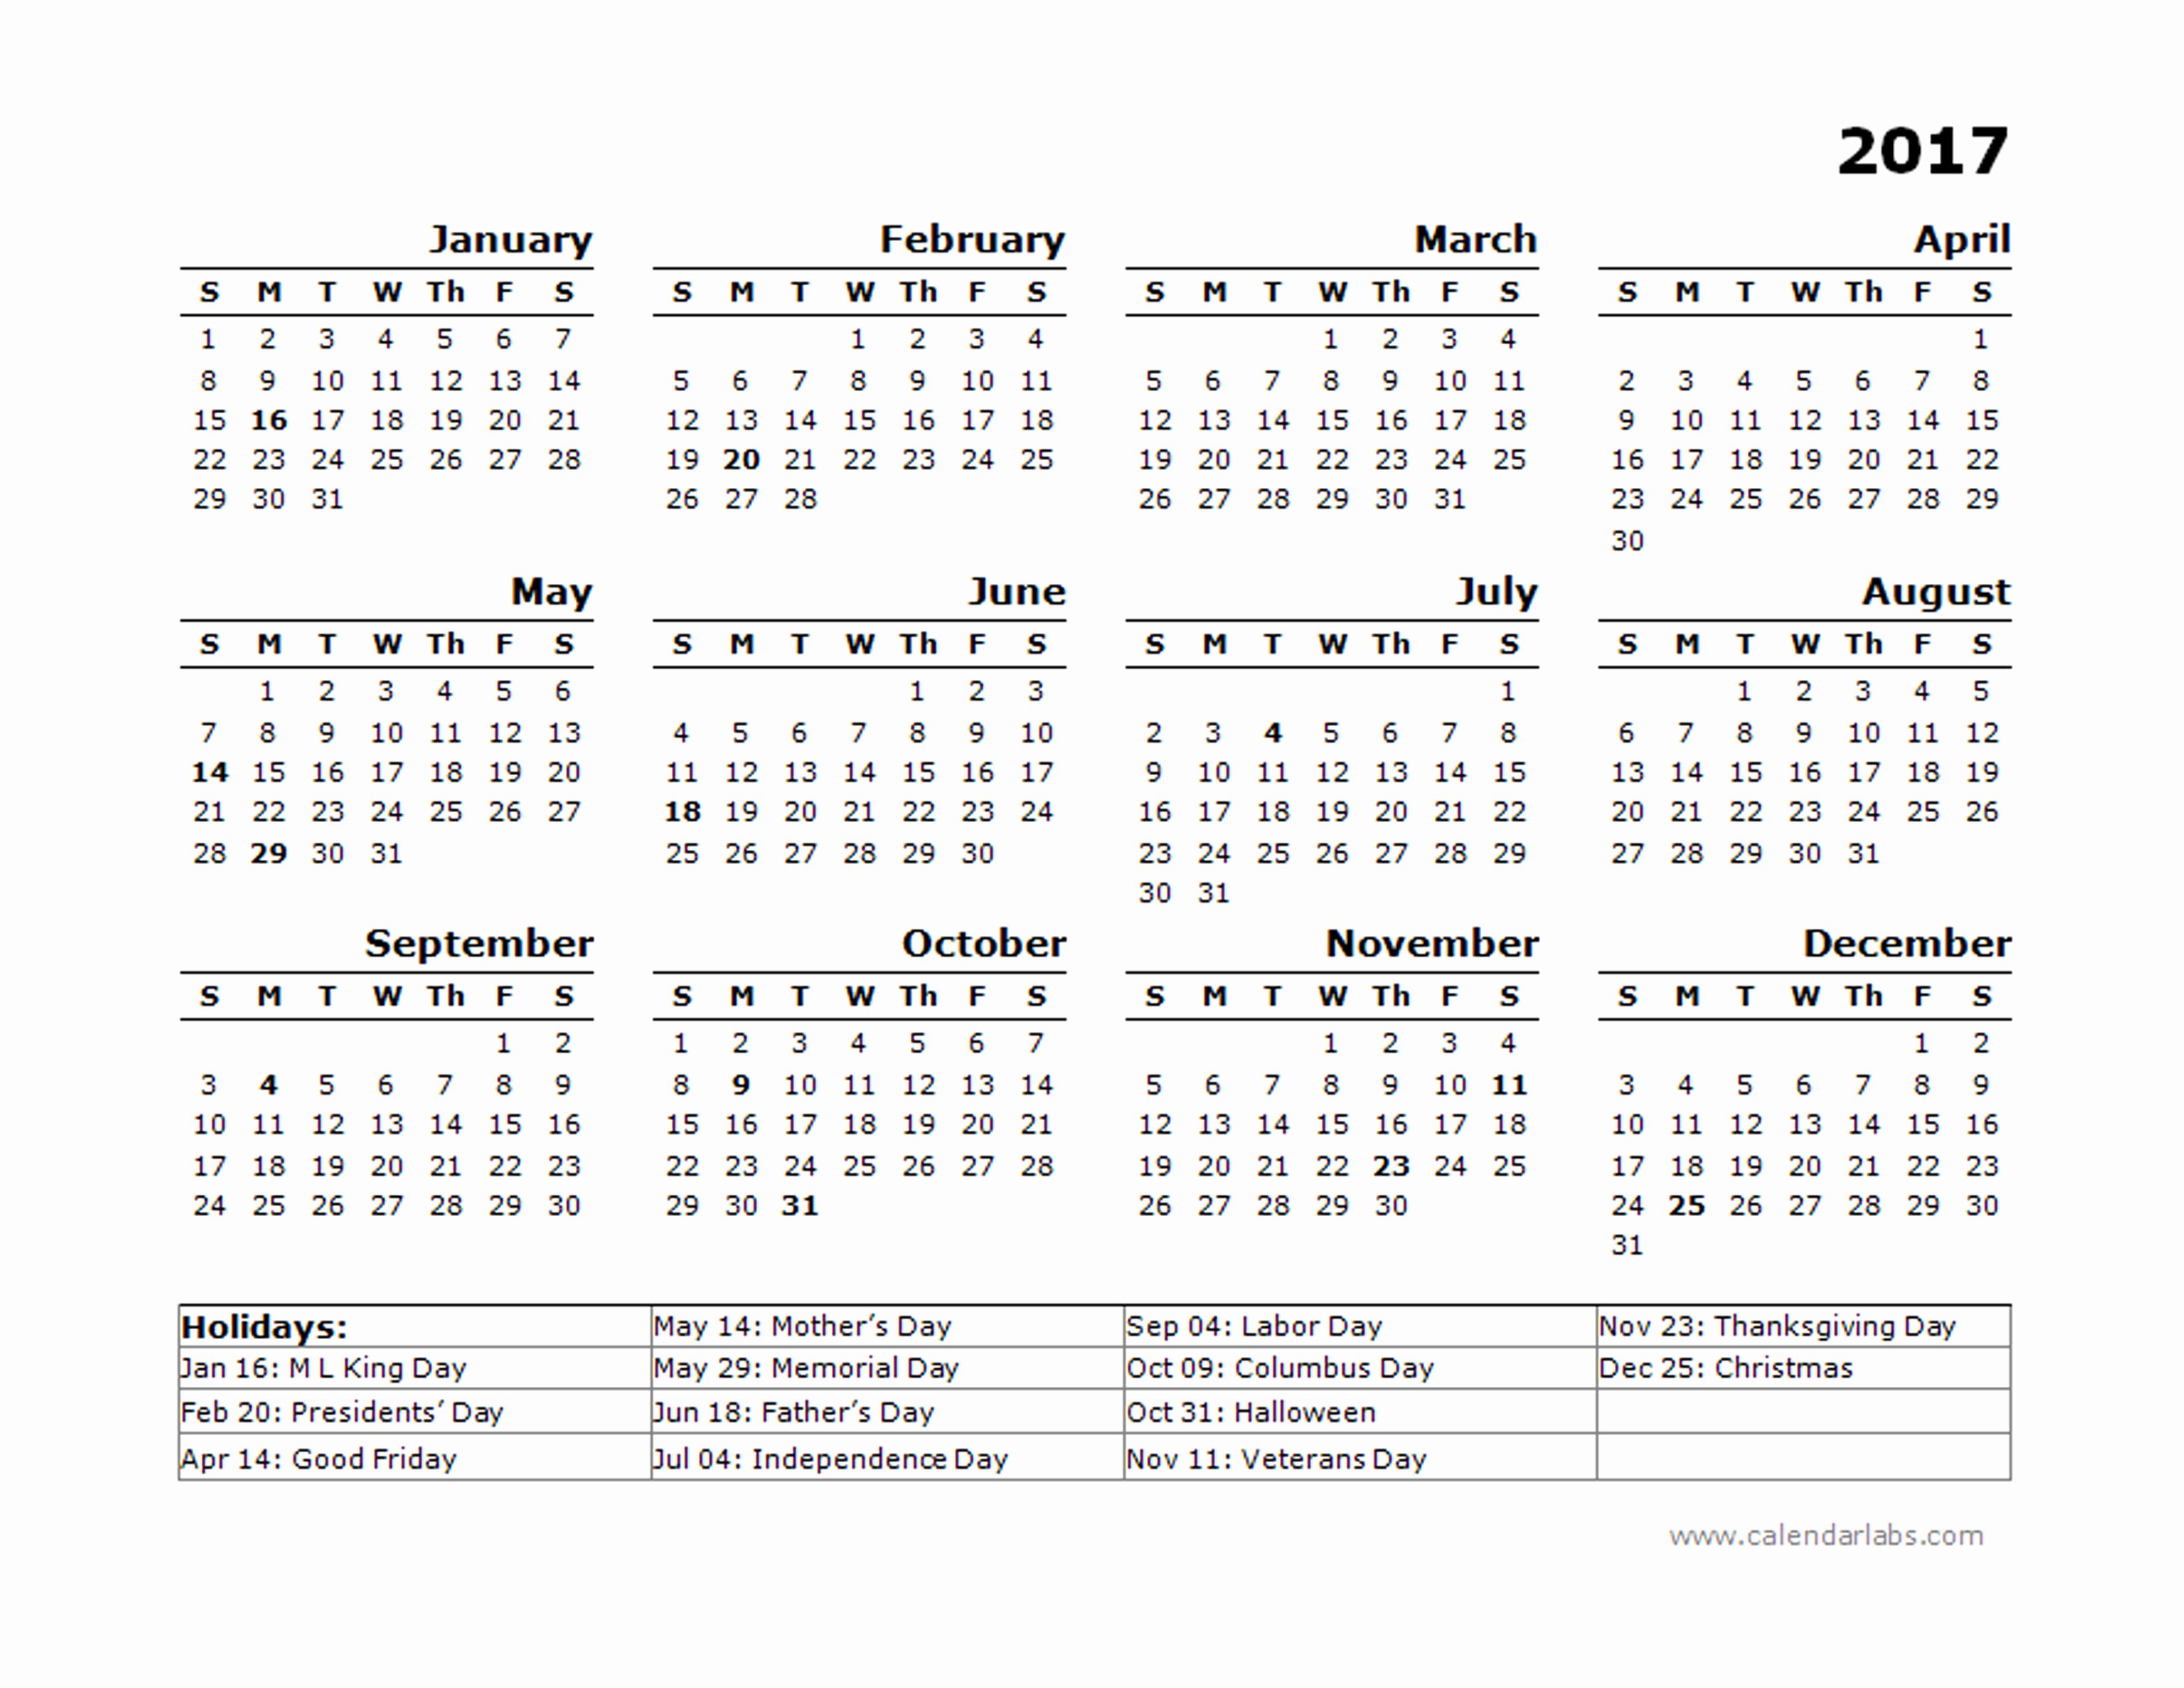 Free Yearly Calendar 2017 Inspirational 2017 Year Calendar Template Us Holidays Free Printable